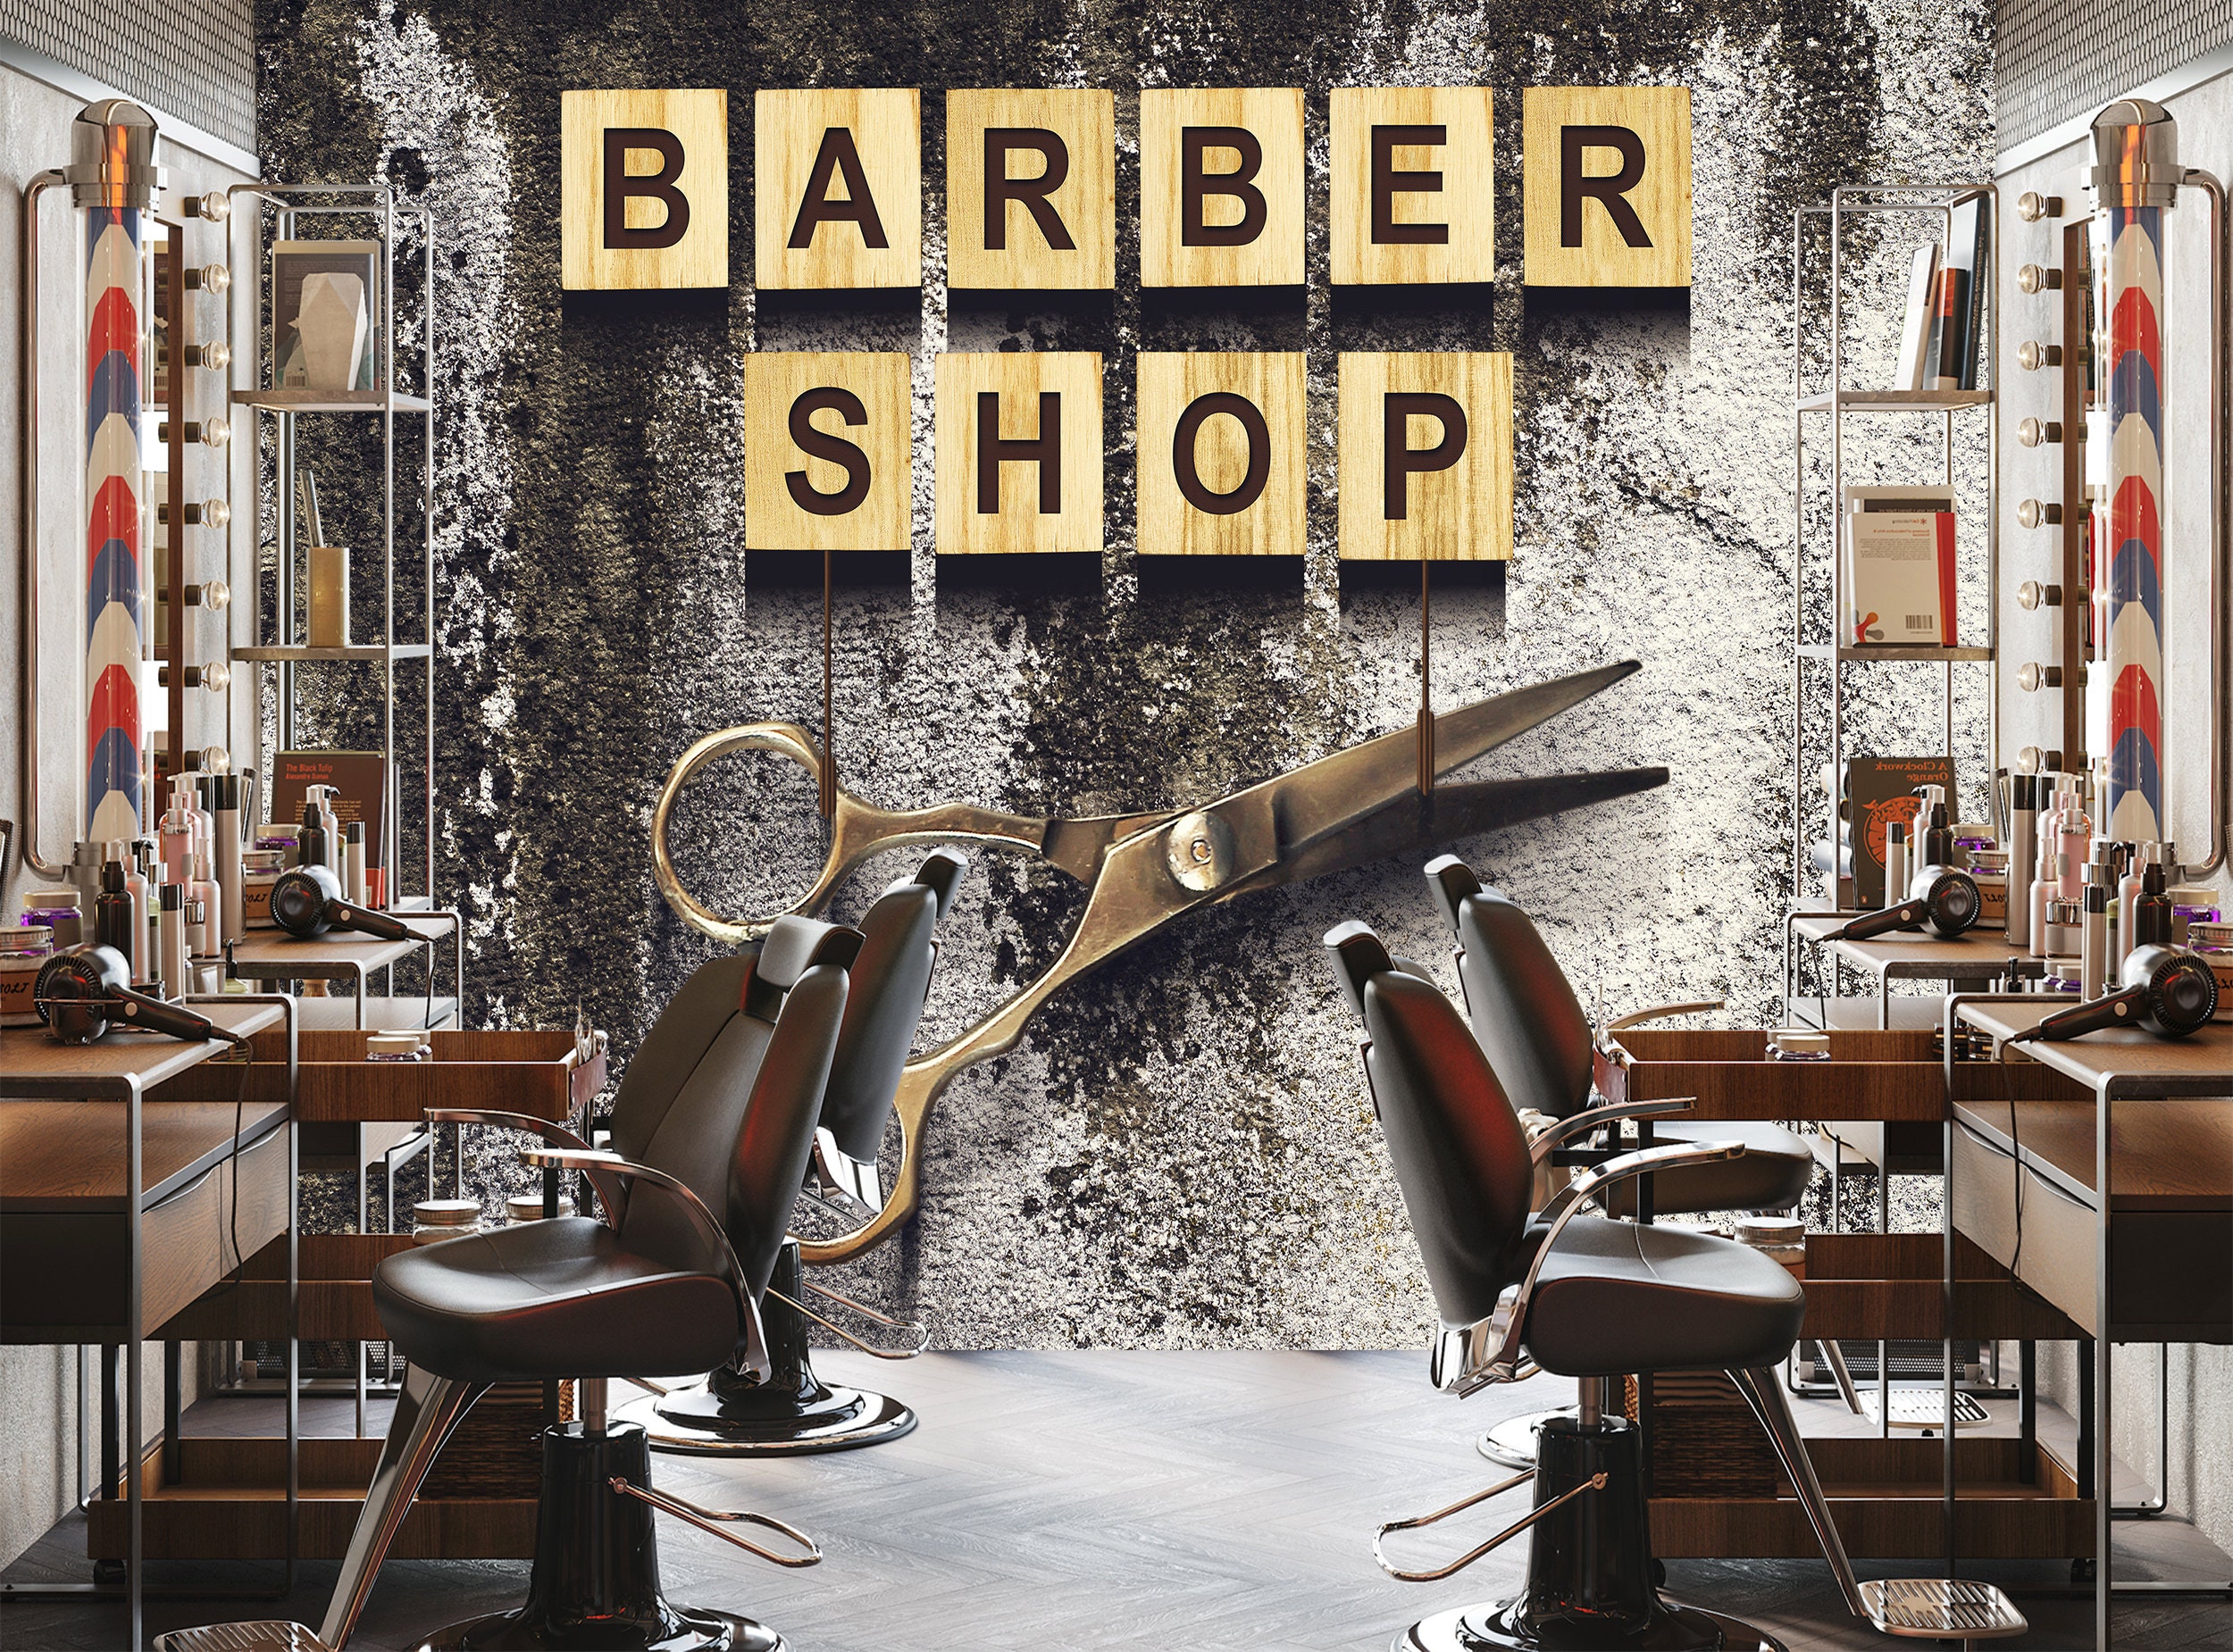 Barber Tools Pictures  Download Free Images on Unsplash